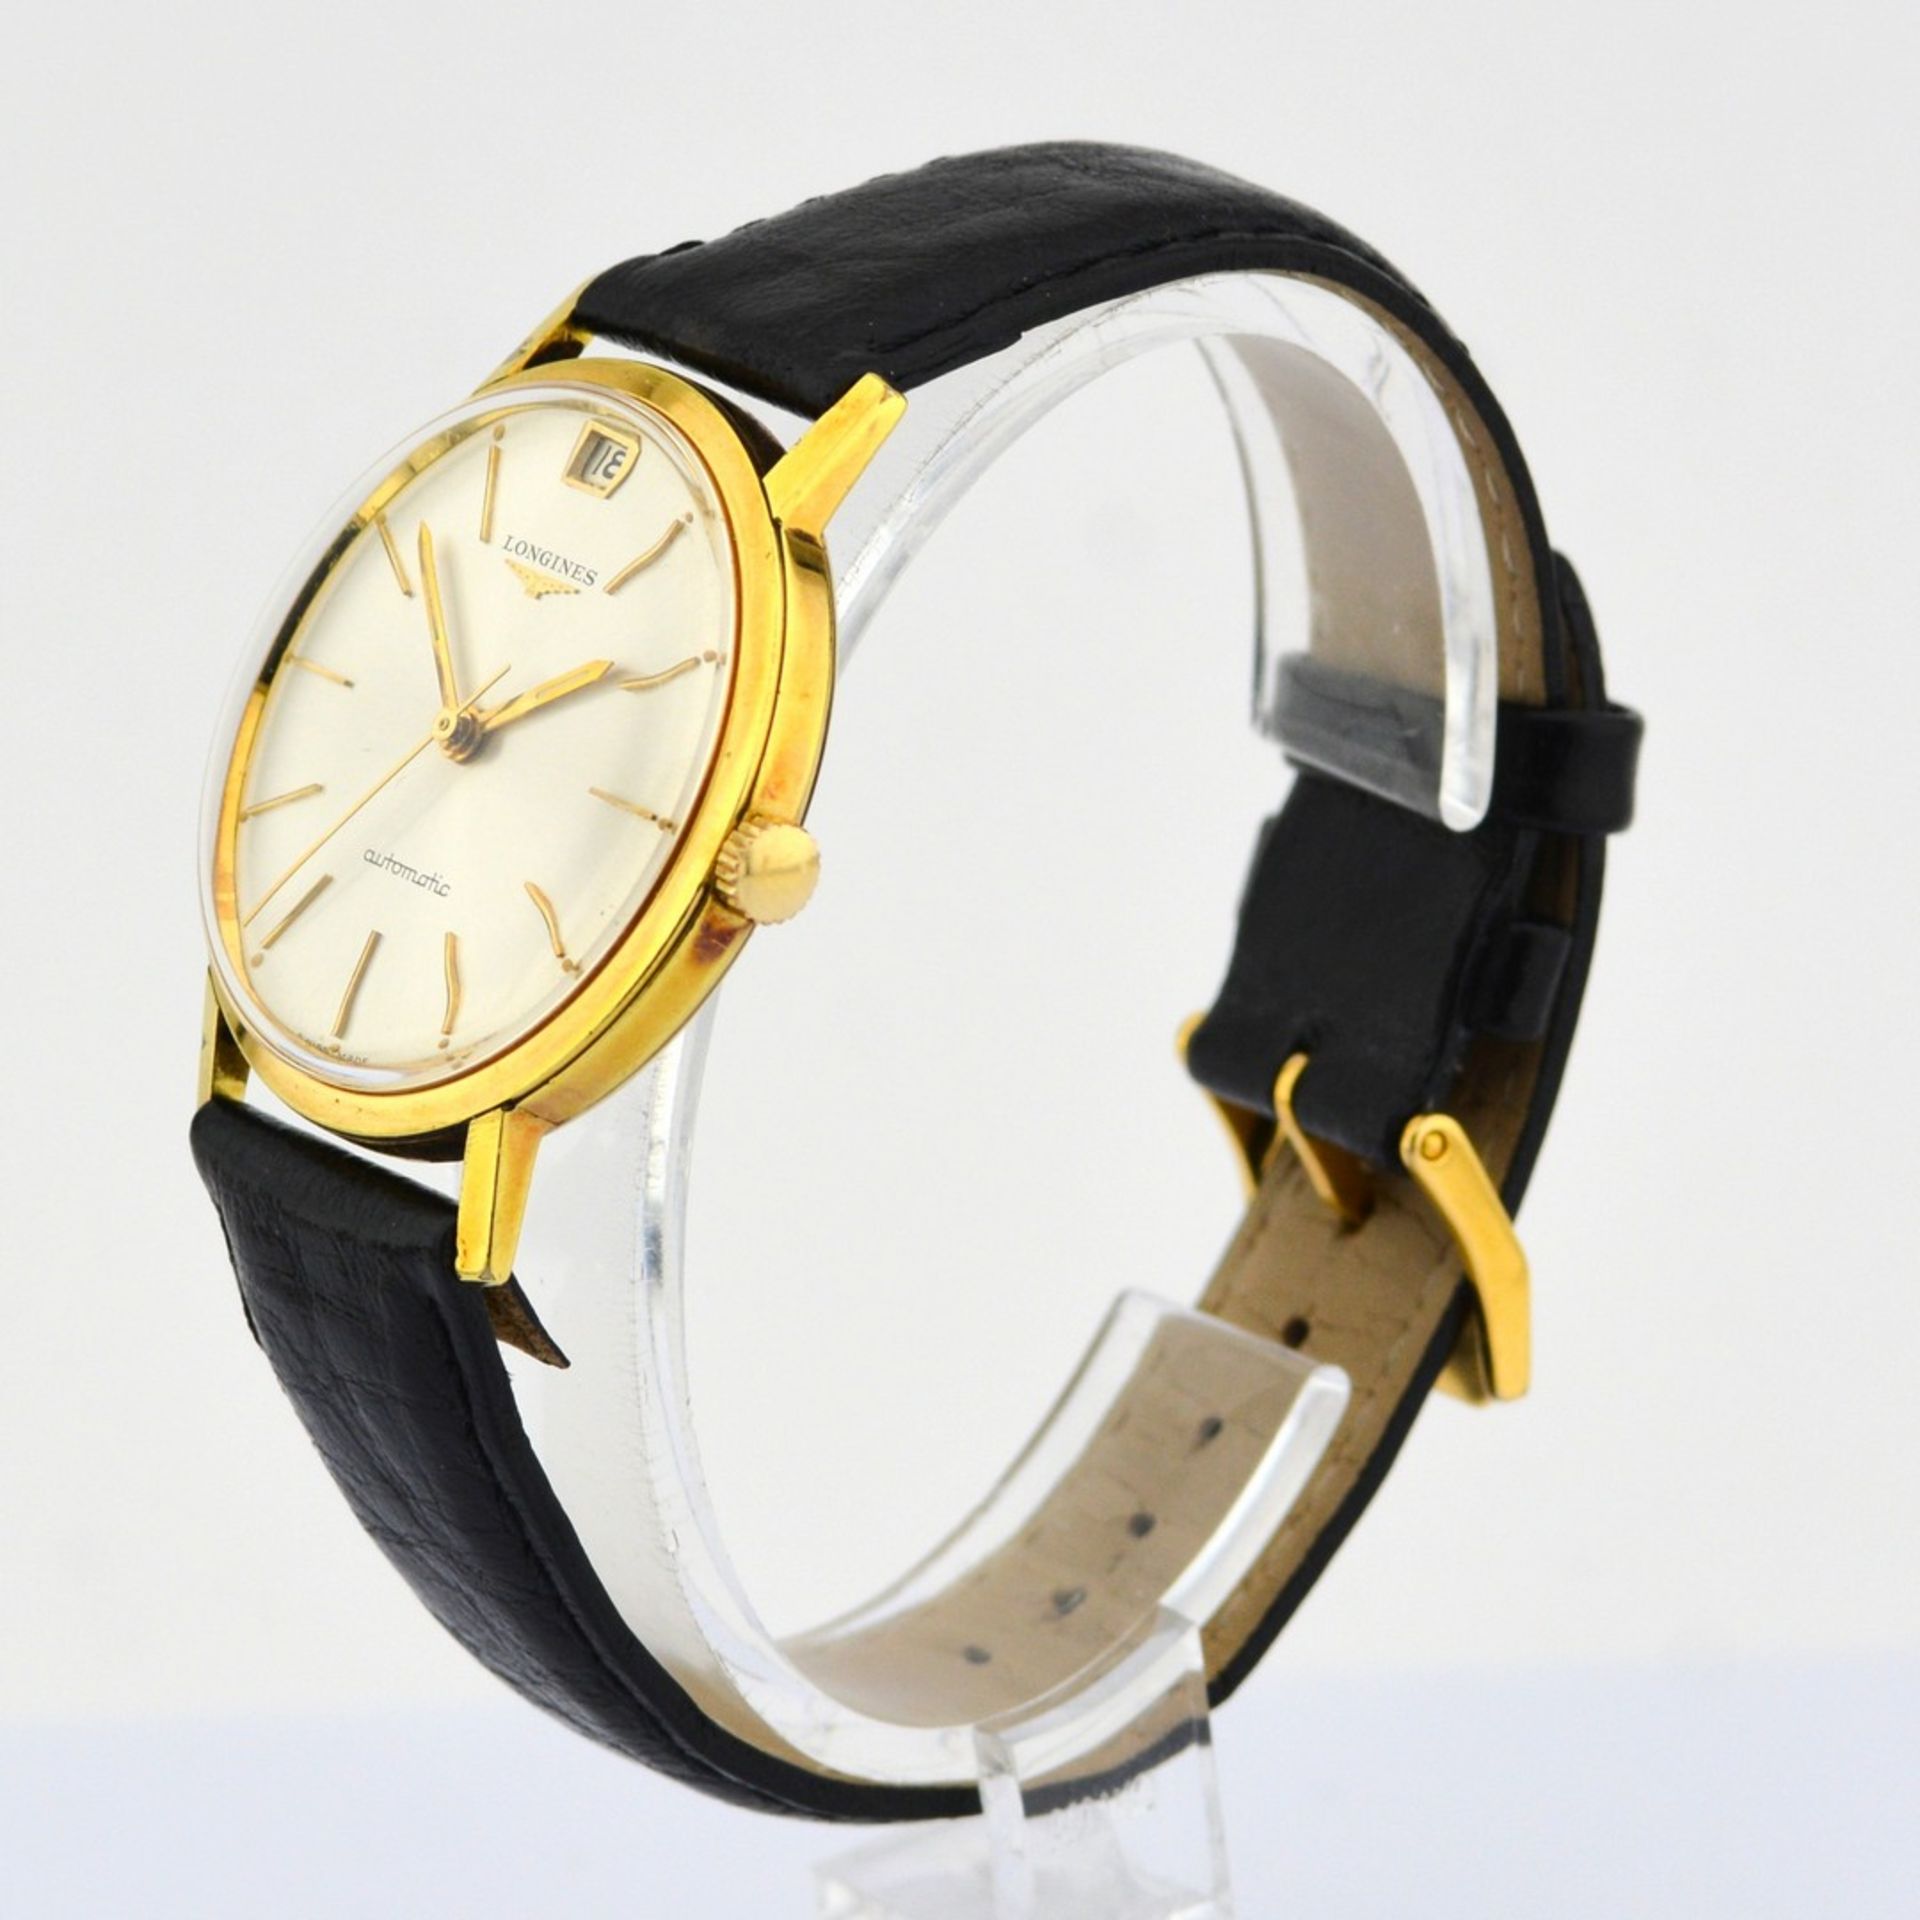 Longines / Vintage Automatic Date - Gentlmen's Steel Wrist Watch - Image 4 of 6